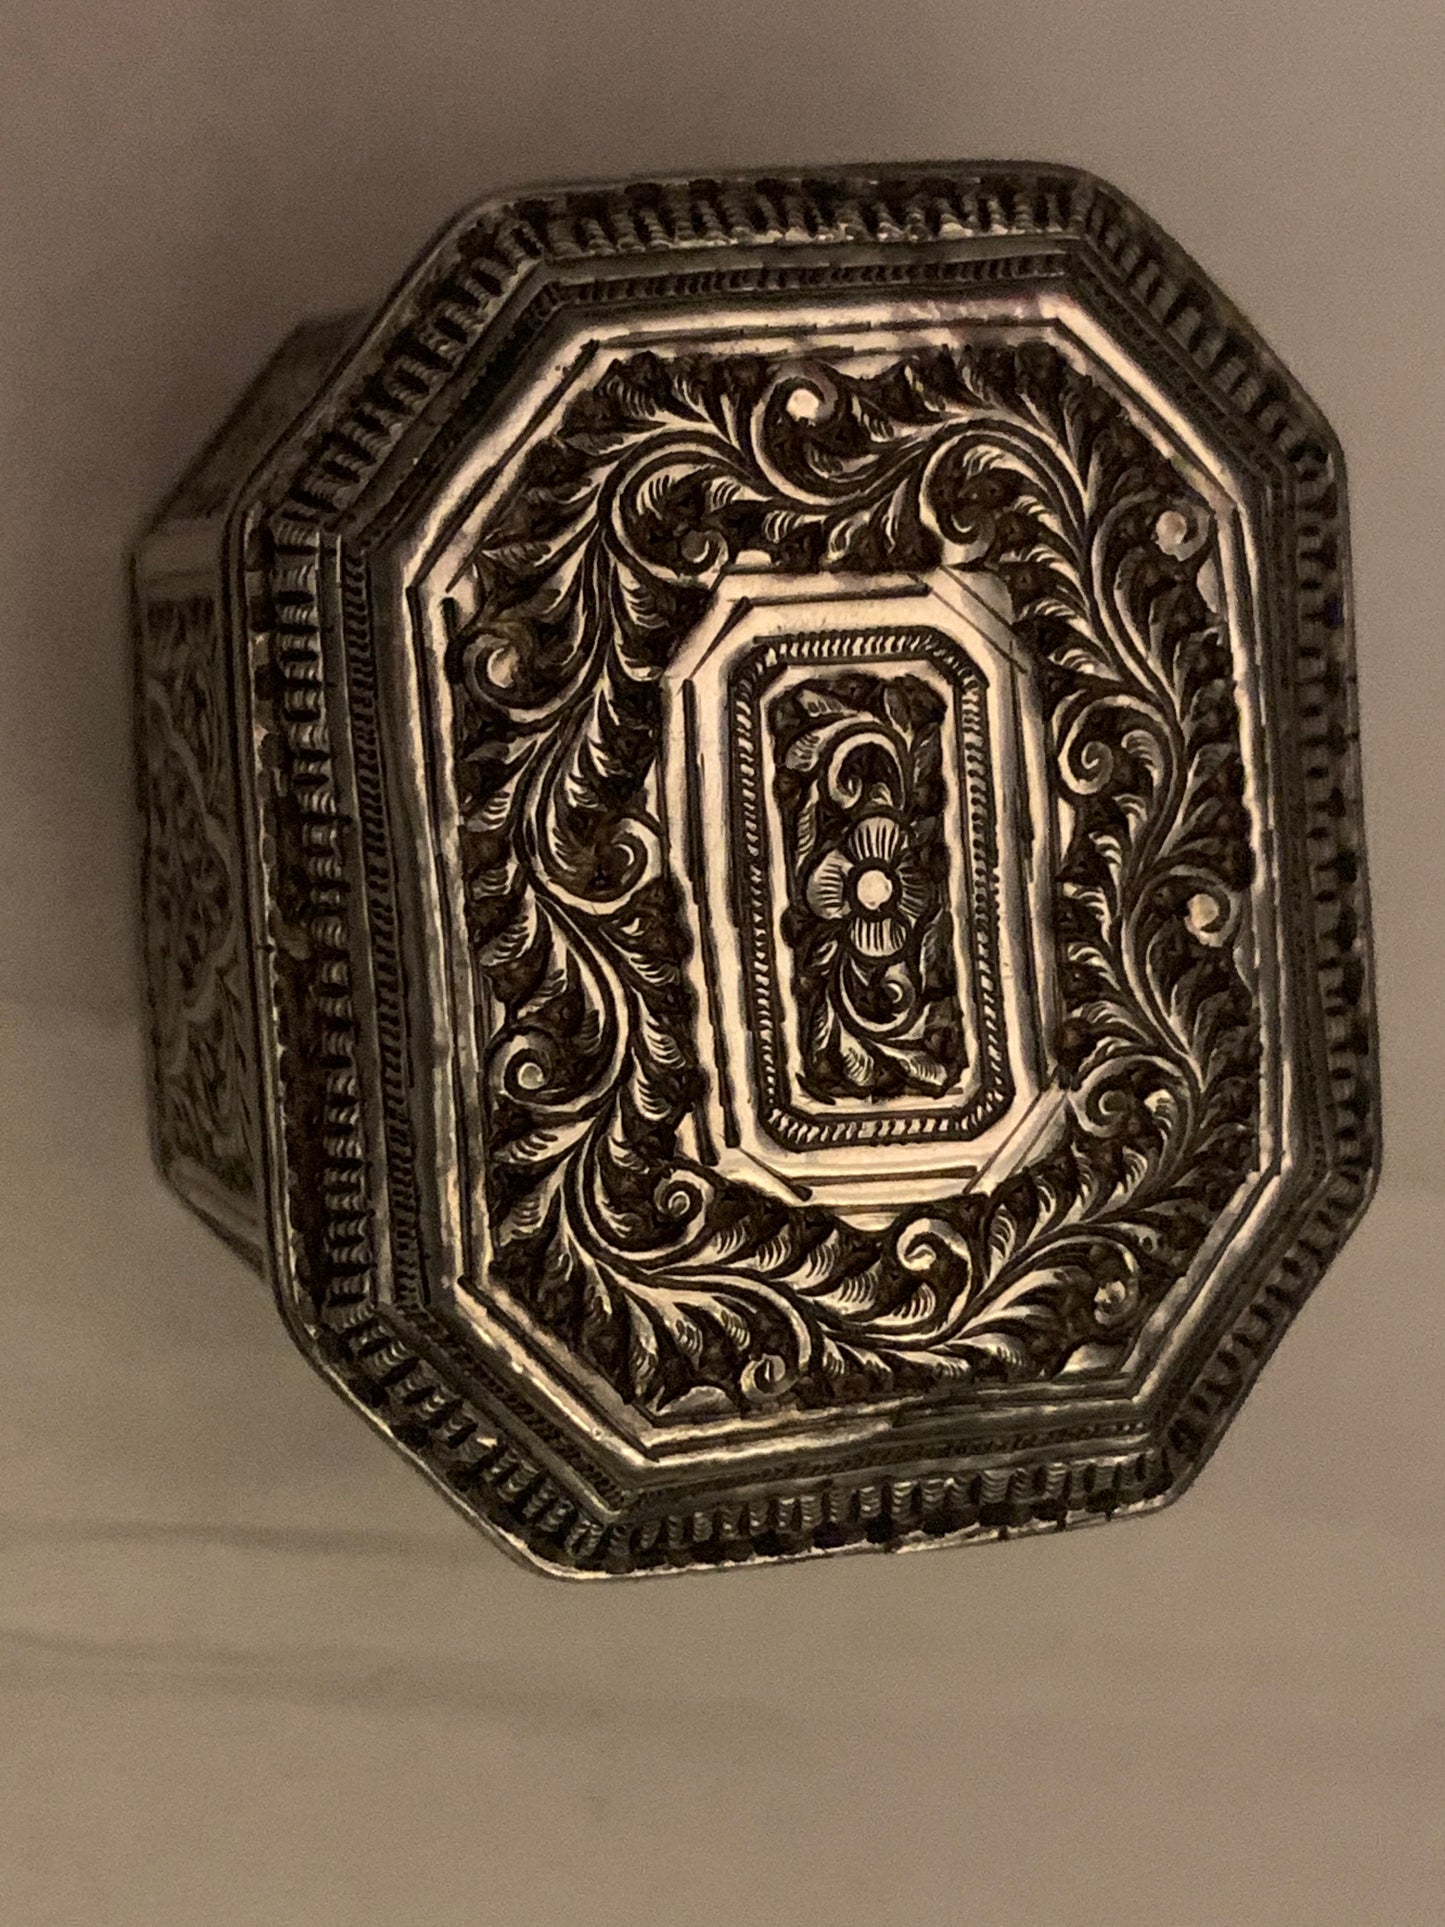 An octagonal silver box